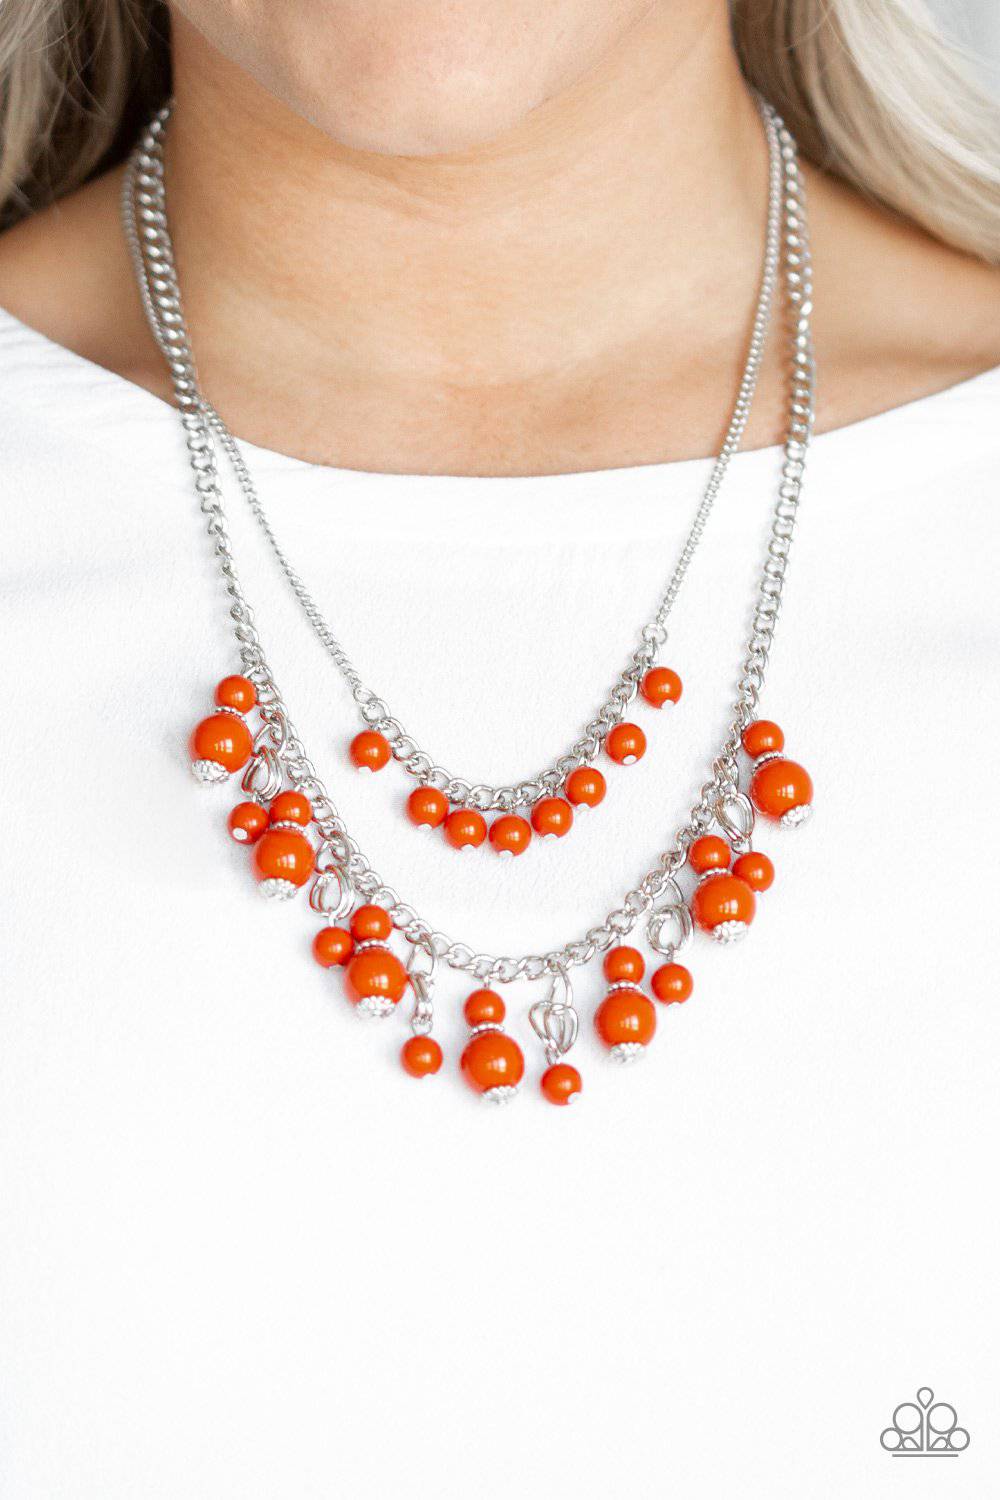 Beautifully Beaded - Orange Bead Necklace - Paparazzi Accessories - GlaMarous Titi Jewels